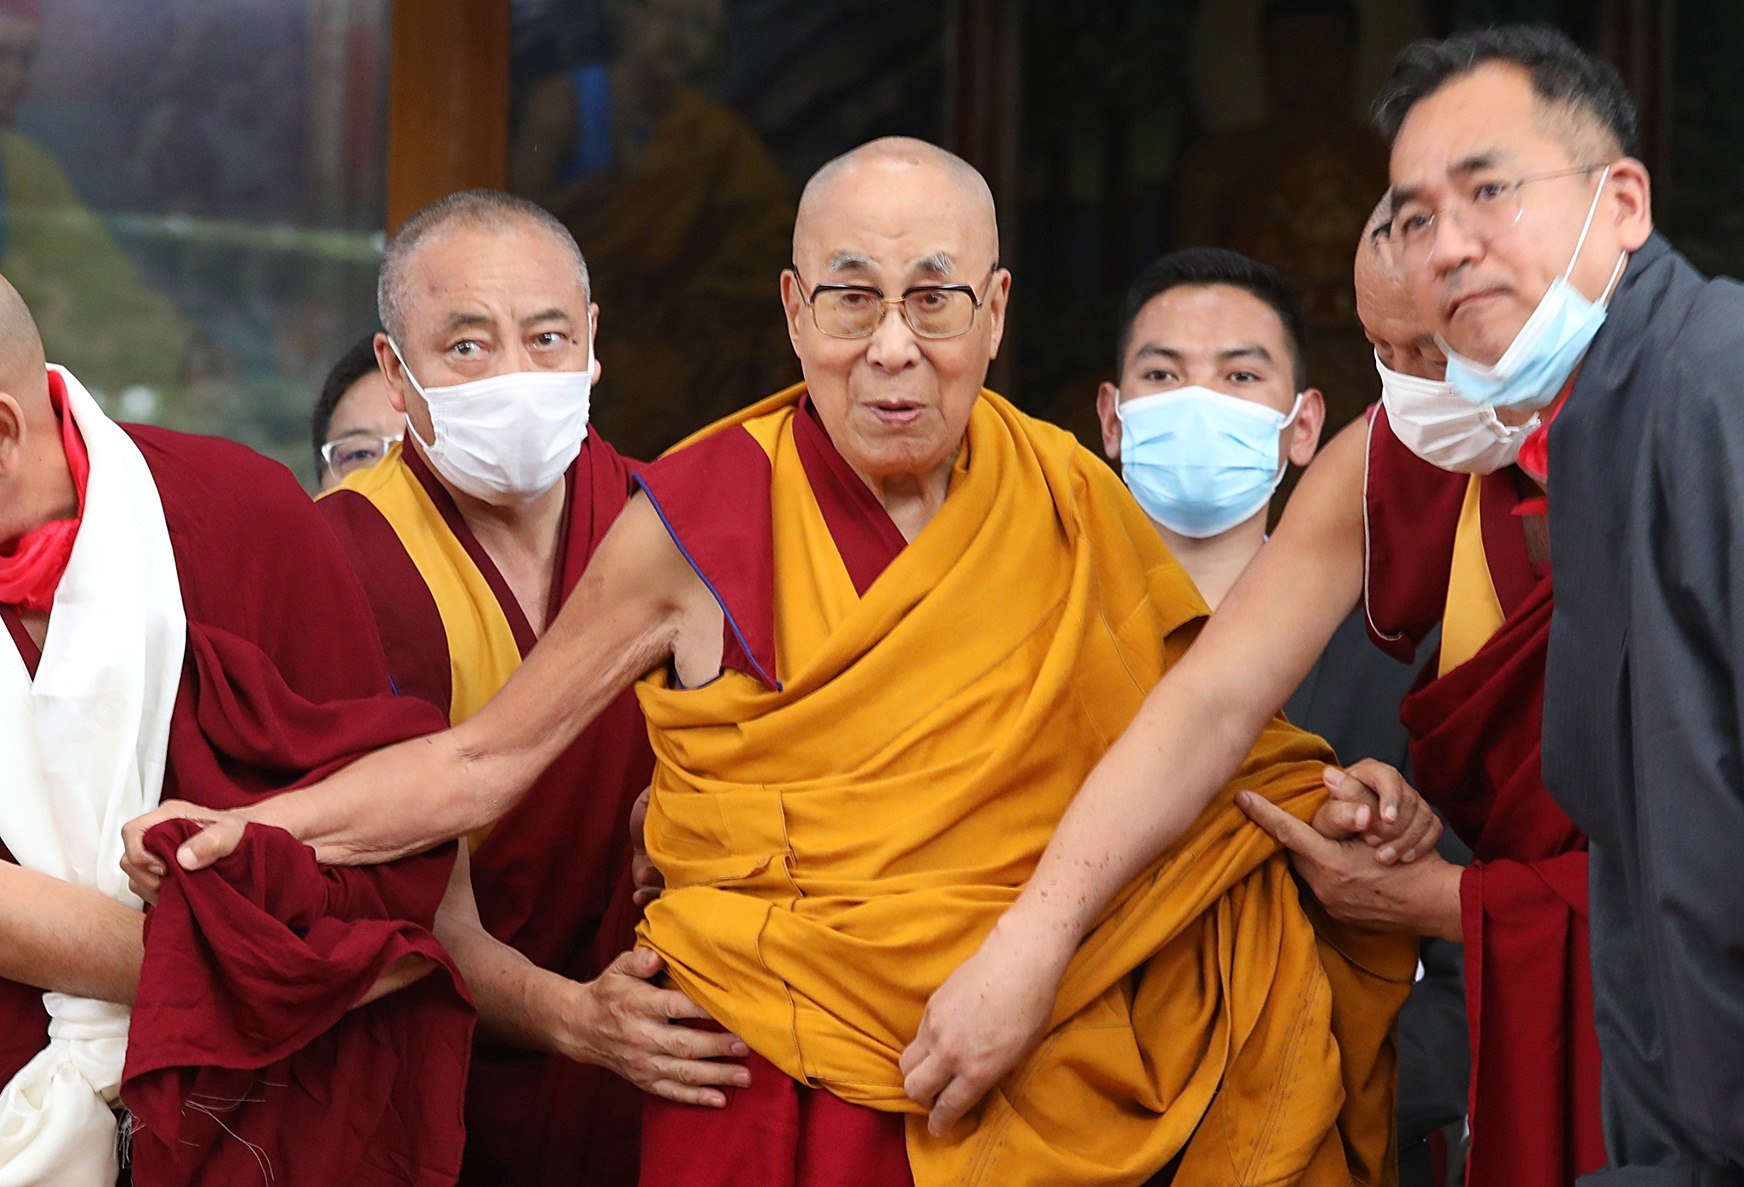 The Dalai Lama, Tibet’s exiled spiritual leader, celebrated his 88th birthday earlier this month. Photo: EPA-EFE/TRIPTA